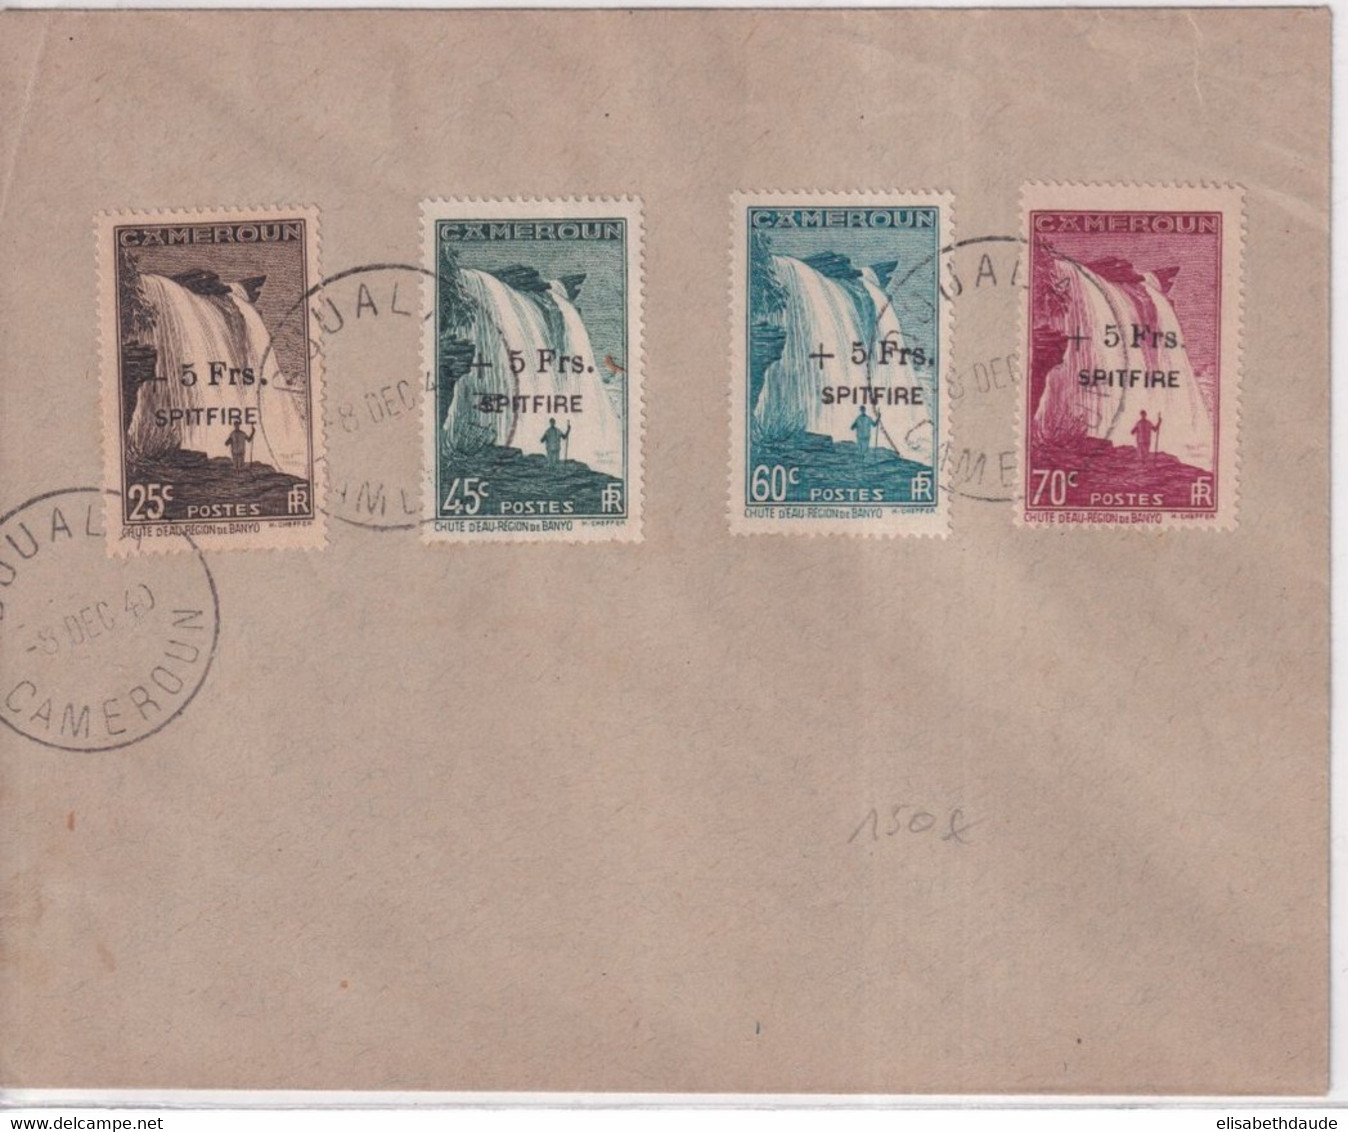 CAMEROUN - 1940 - SERIE FRANCE LIBRE "SPITFIRE" YVERT 236/239 OBLITEREE Sur ENVELOPPE - COTE = 580 EUR. - Briefe U. Dokumente